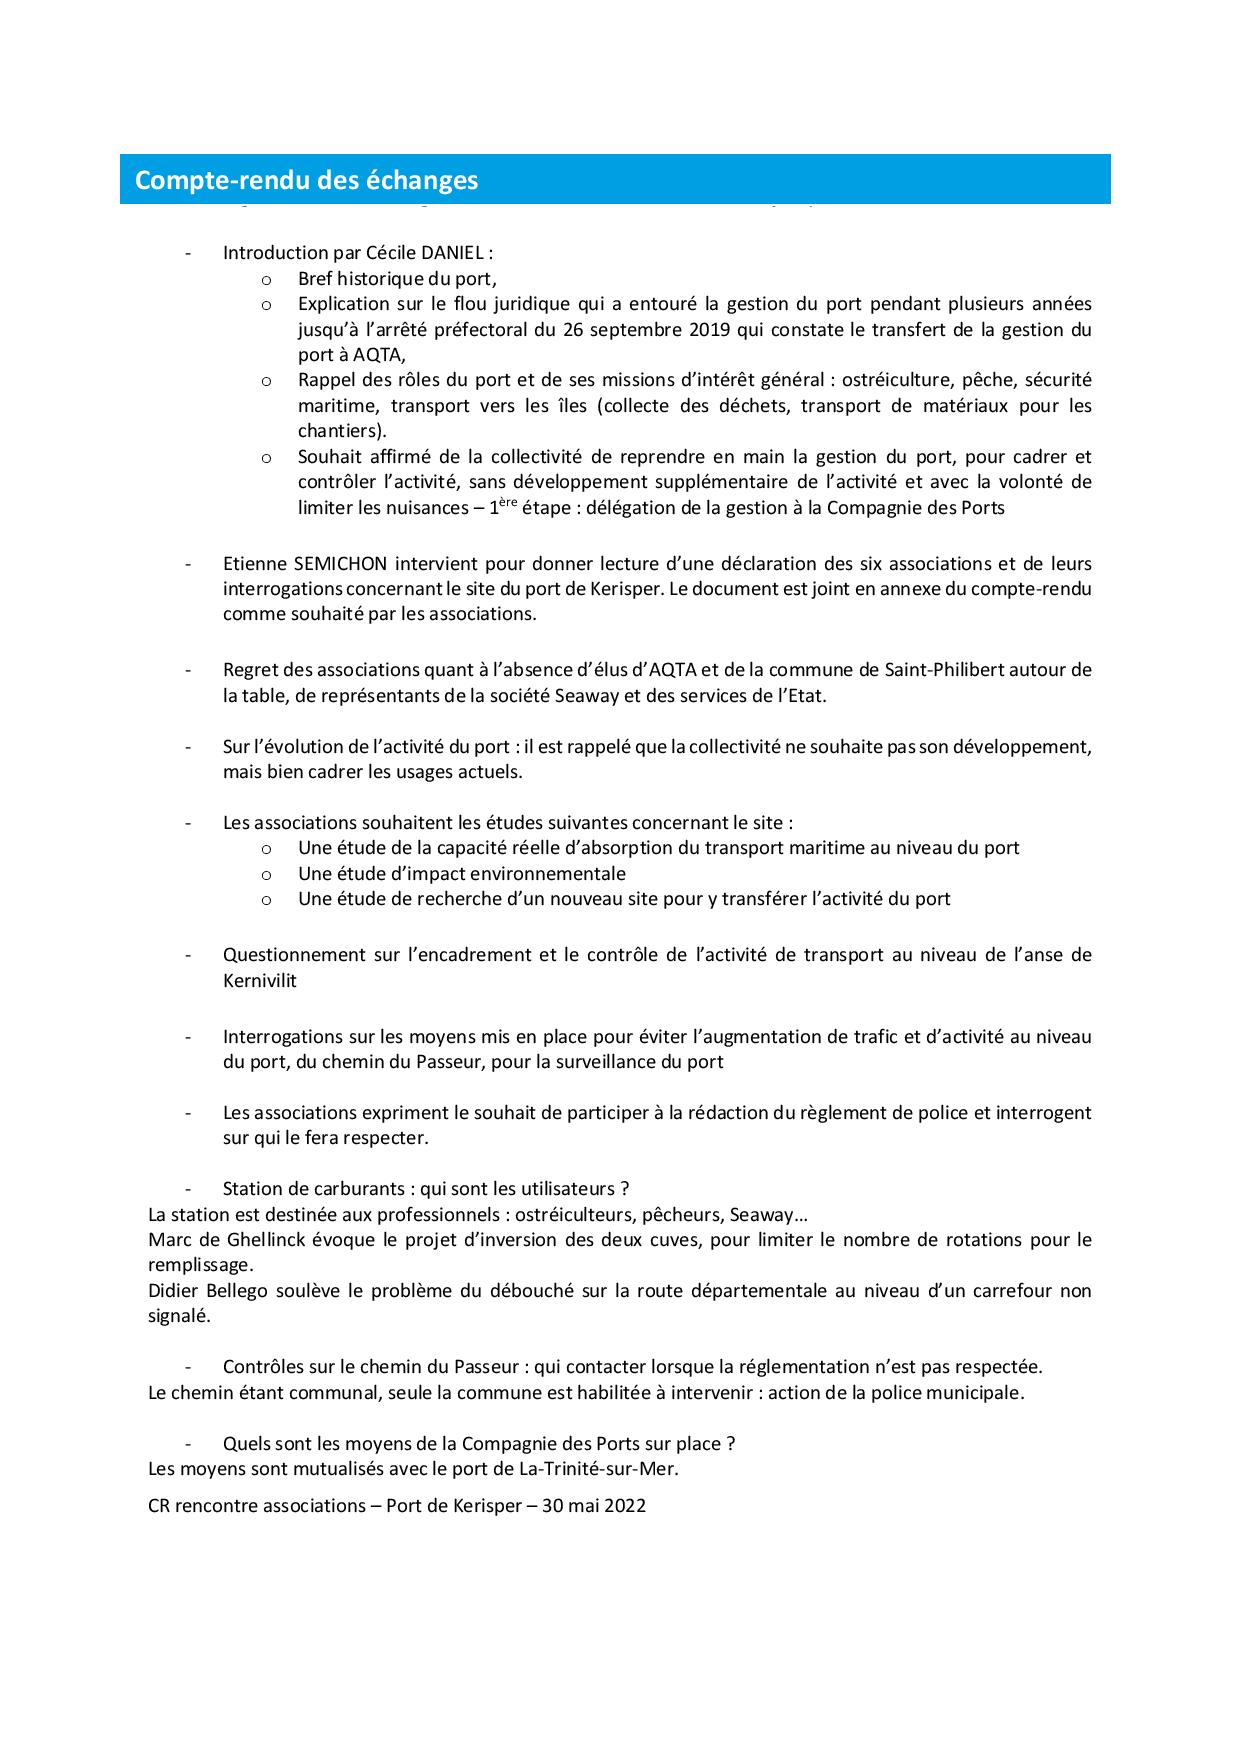 2022 05 30 CR Réunion AQTA CPM Associations-page-002.jpg